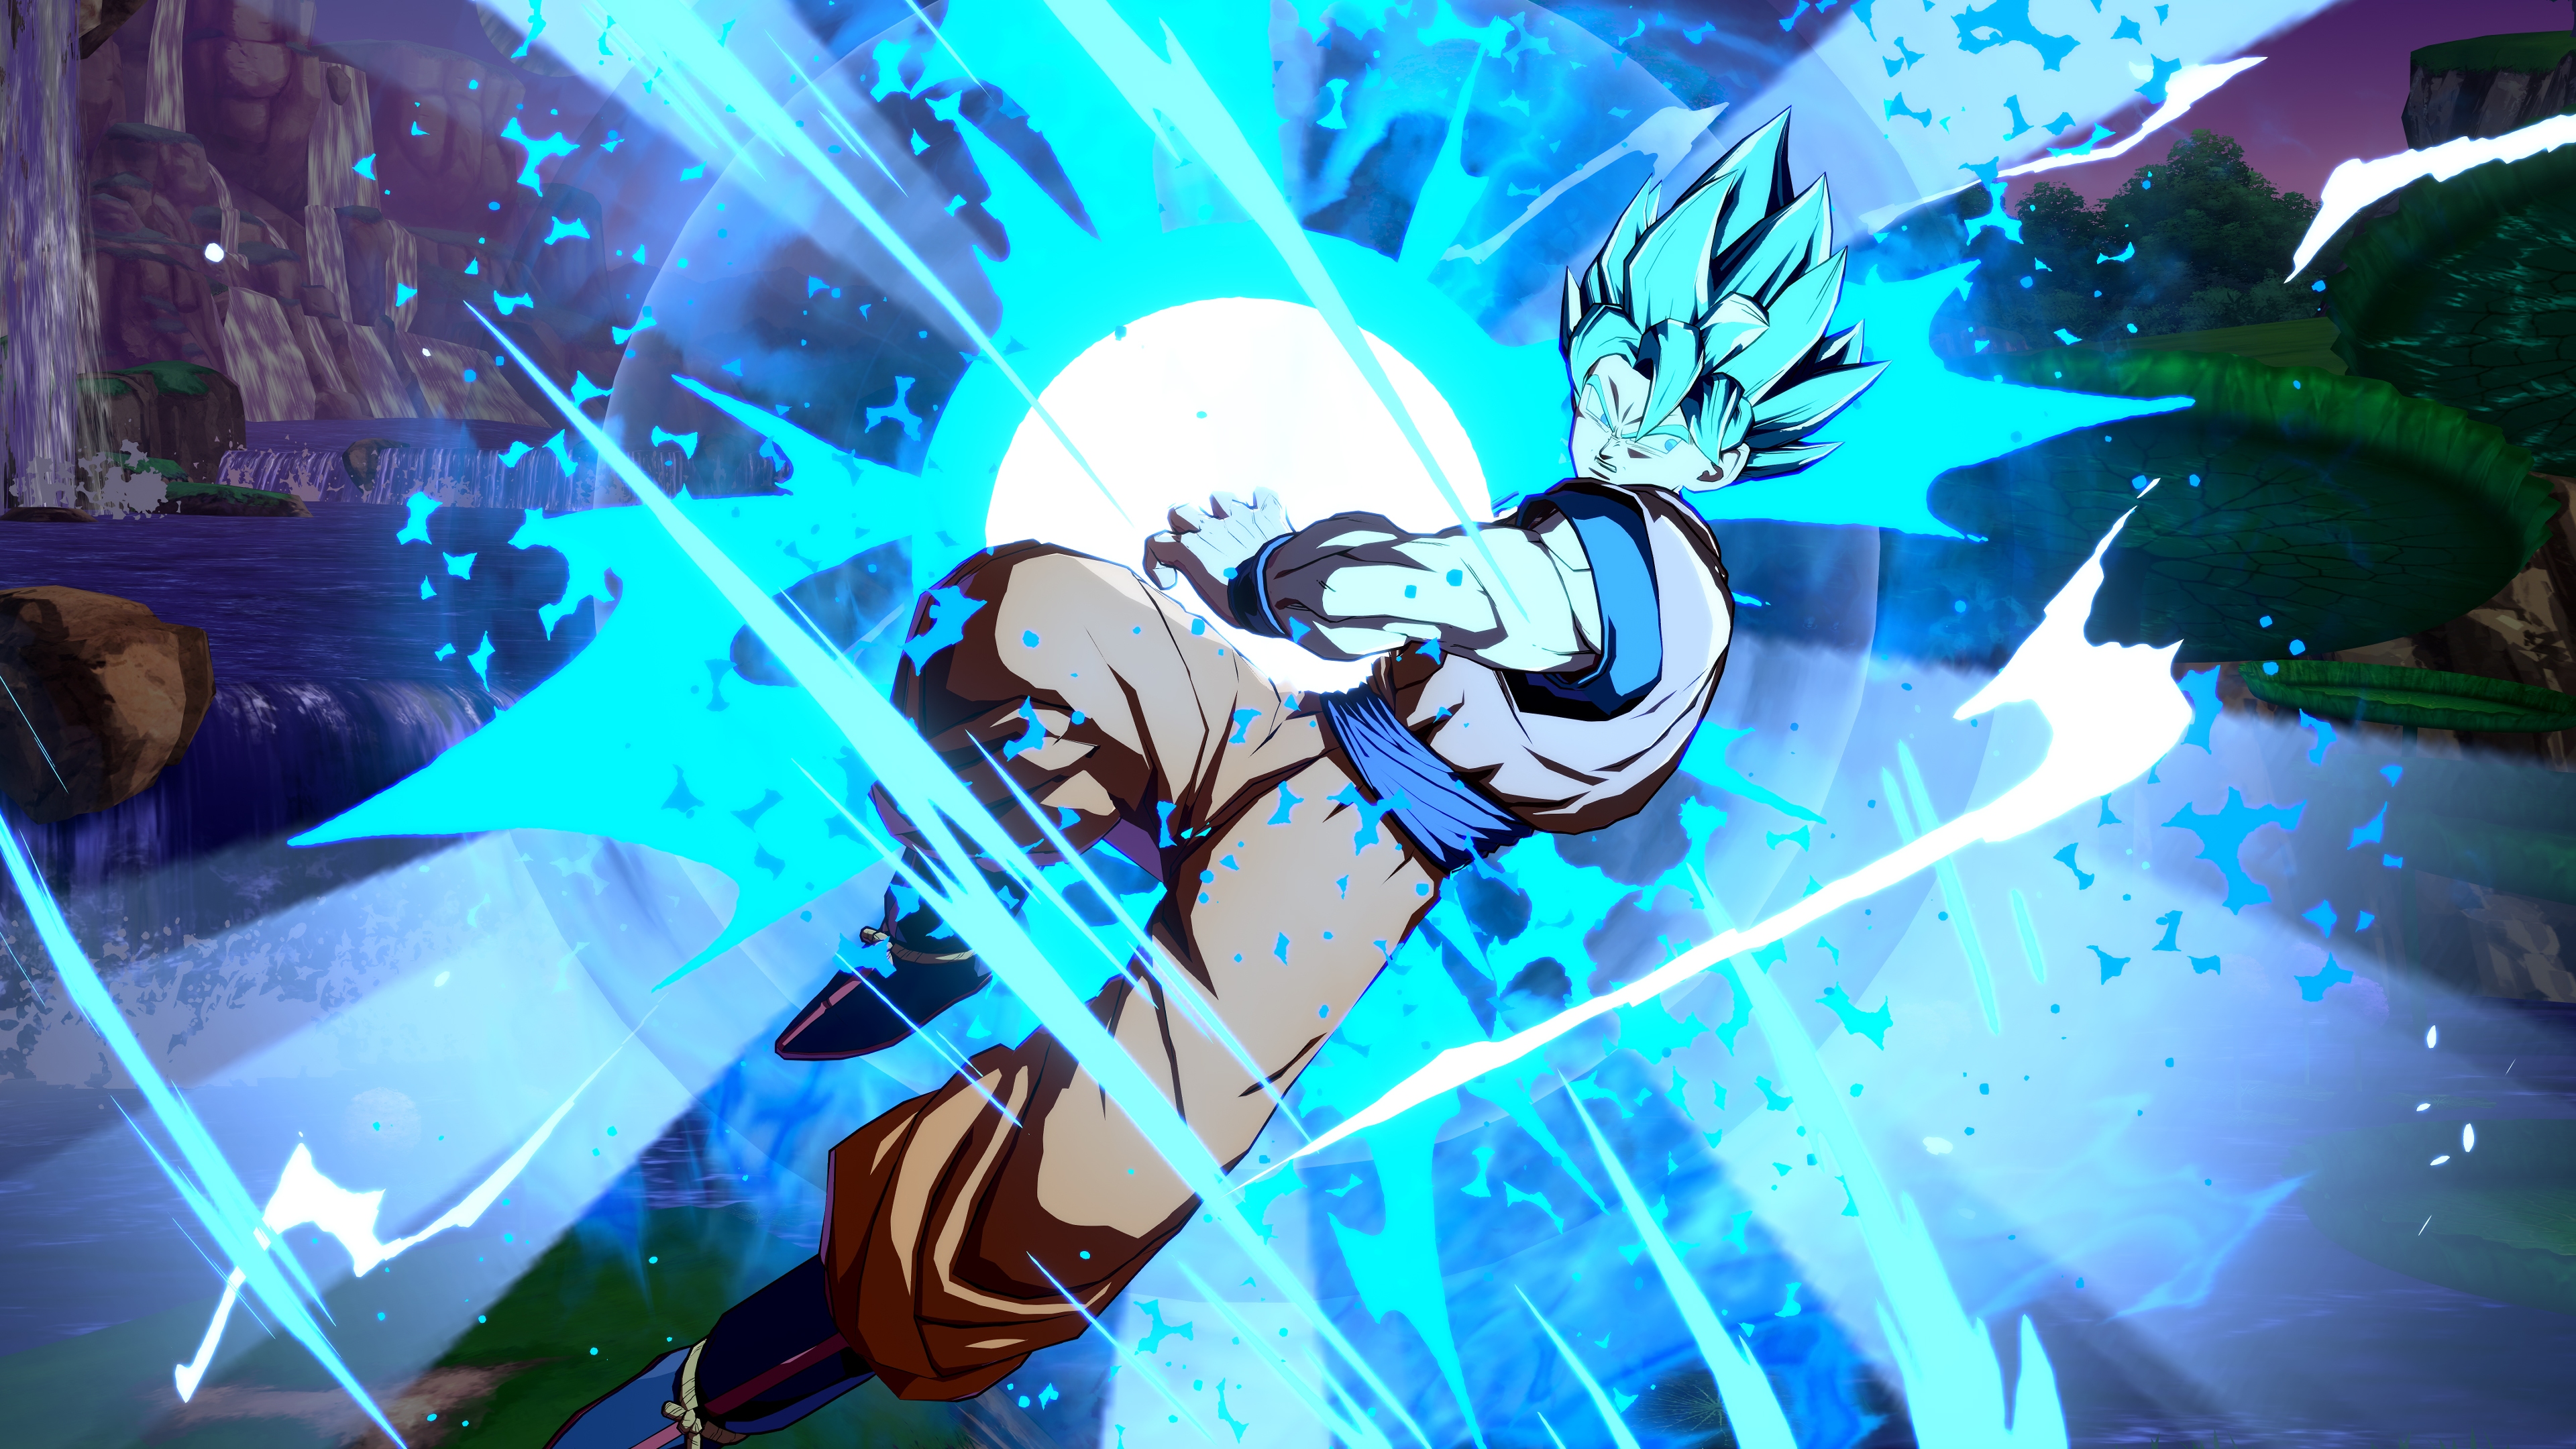 Download Goku Super Saiyan Blue DBZ 4K Wallpaper